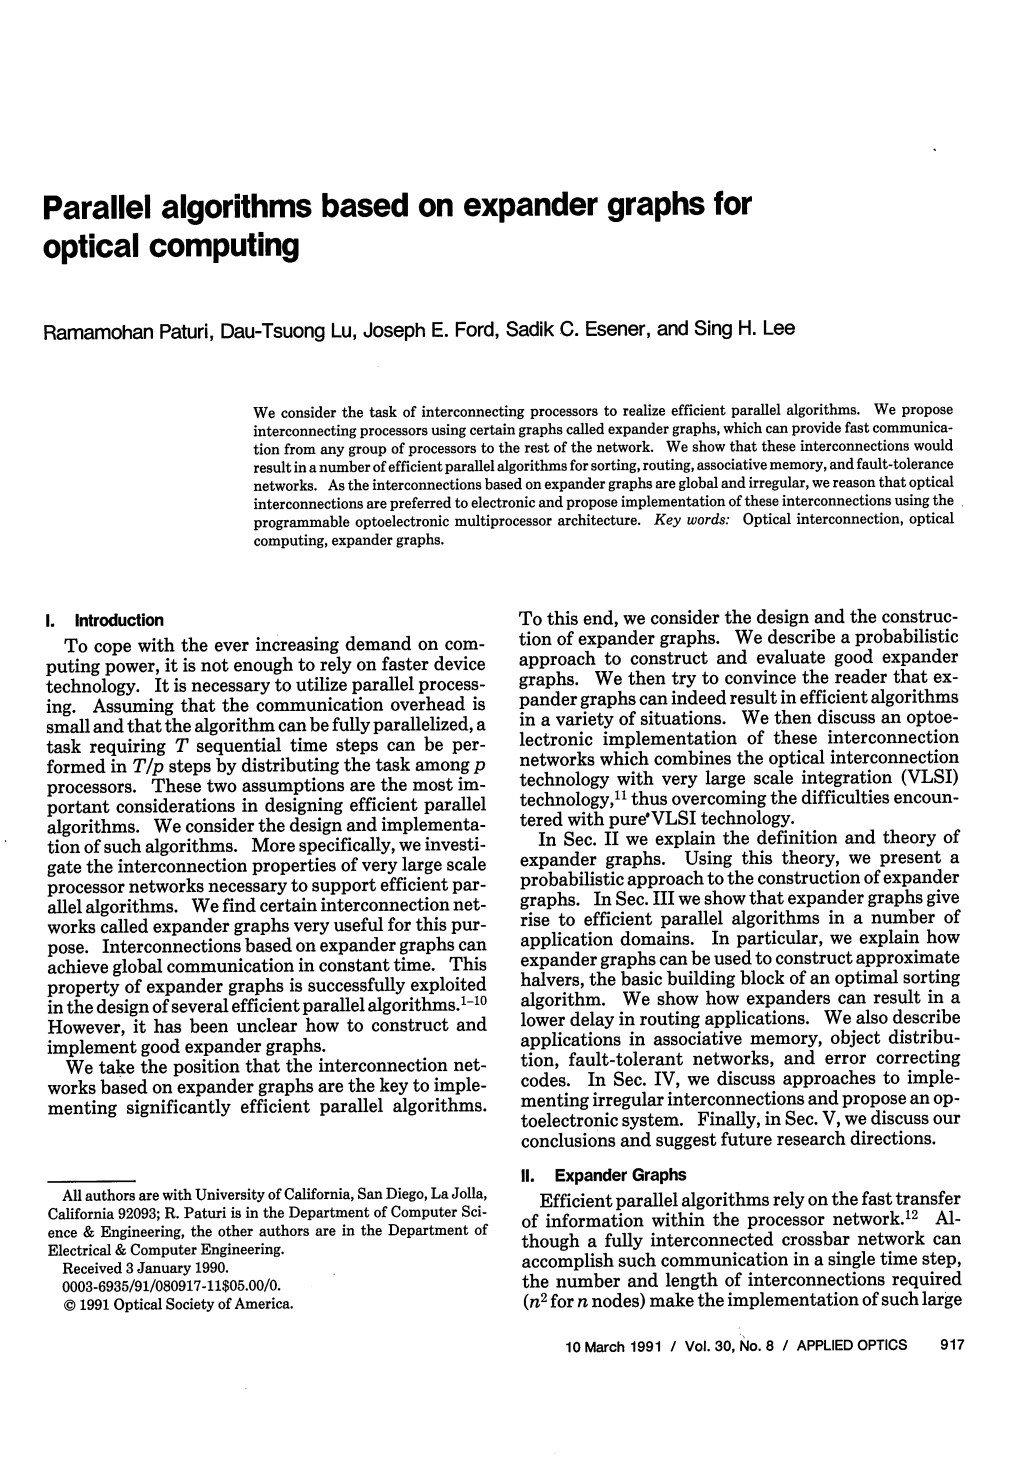 Parallel Algorithms Based on Expander Graphs for Optical Computing